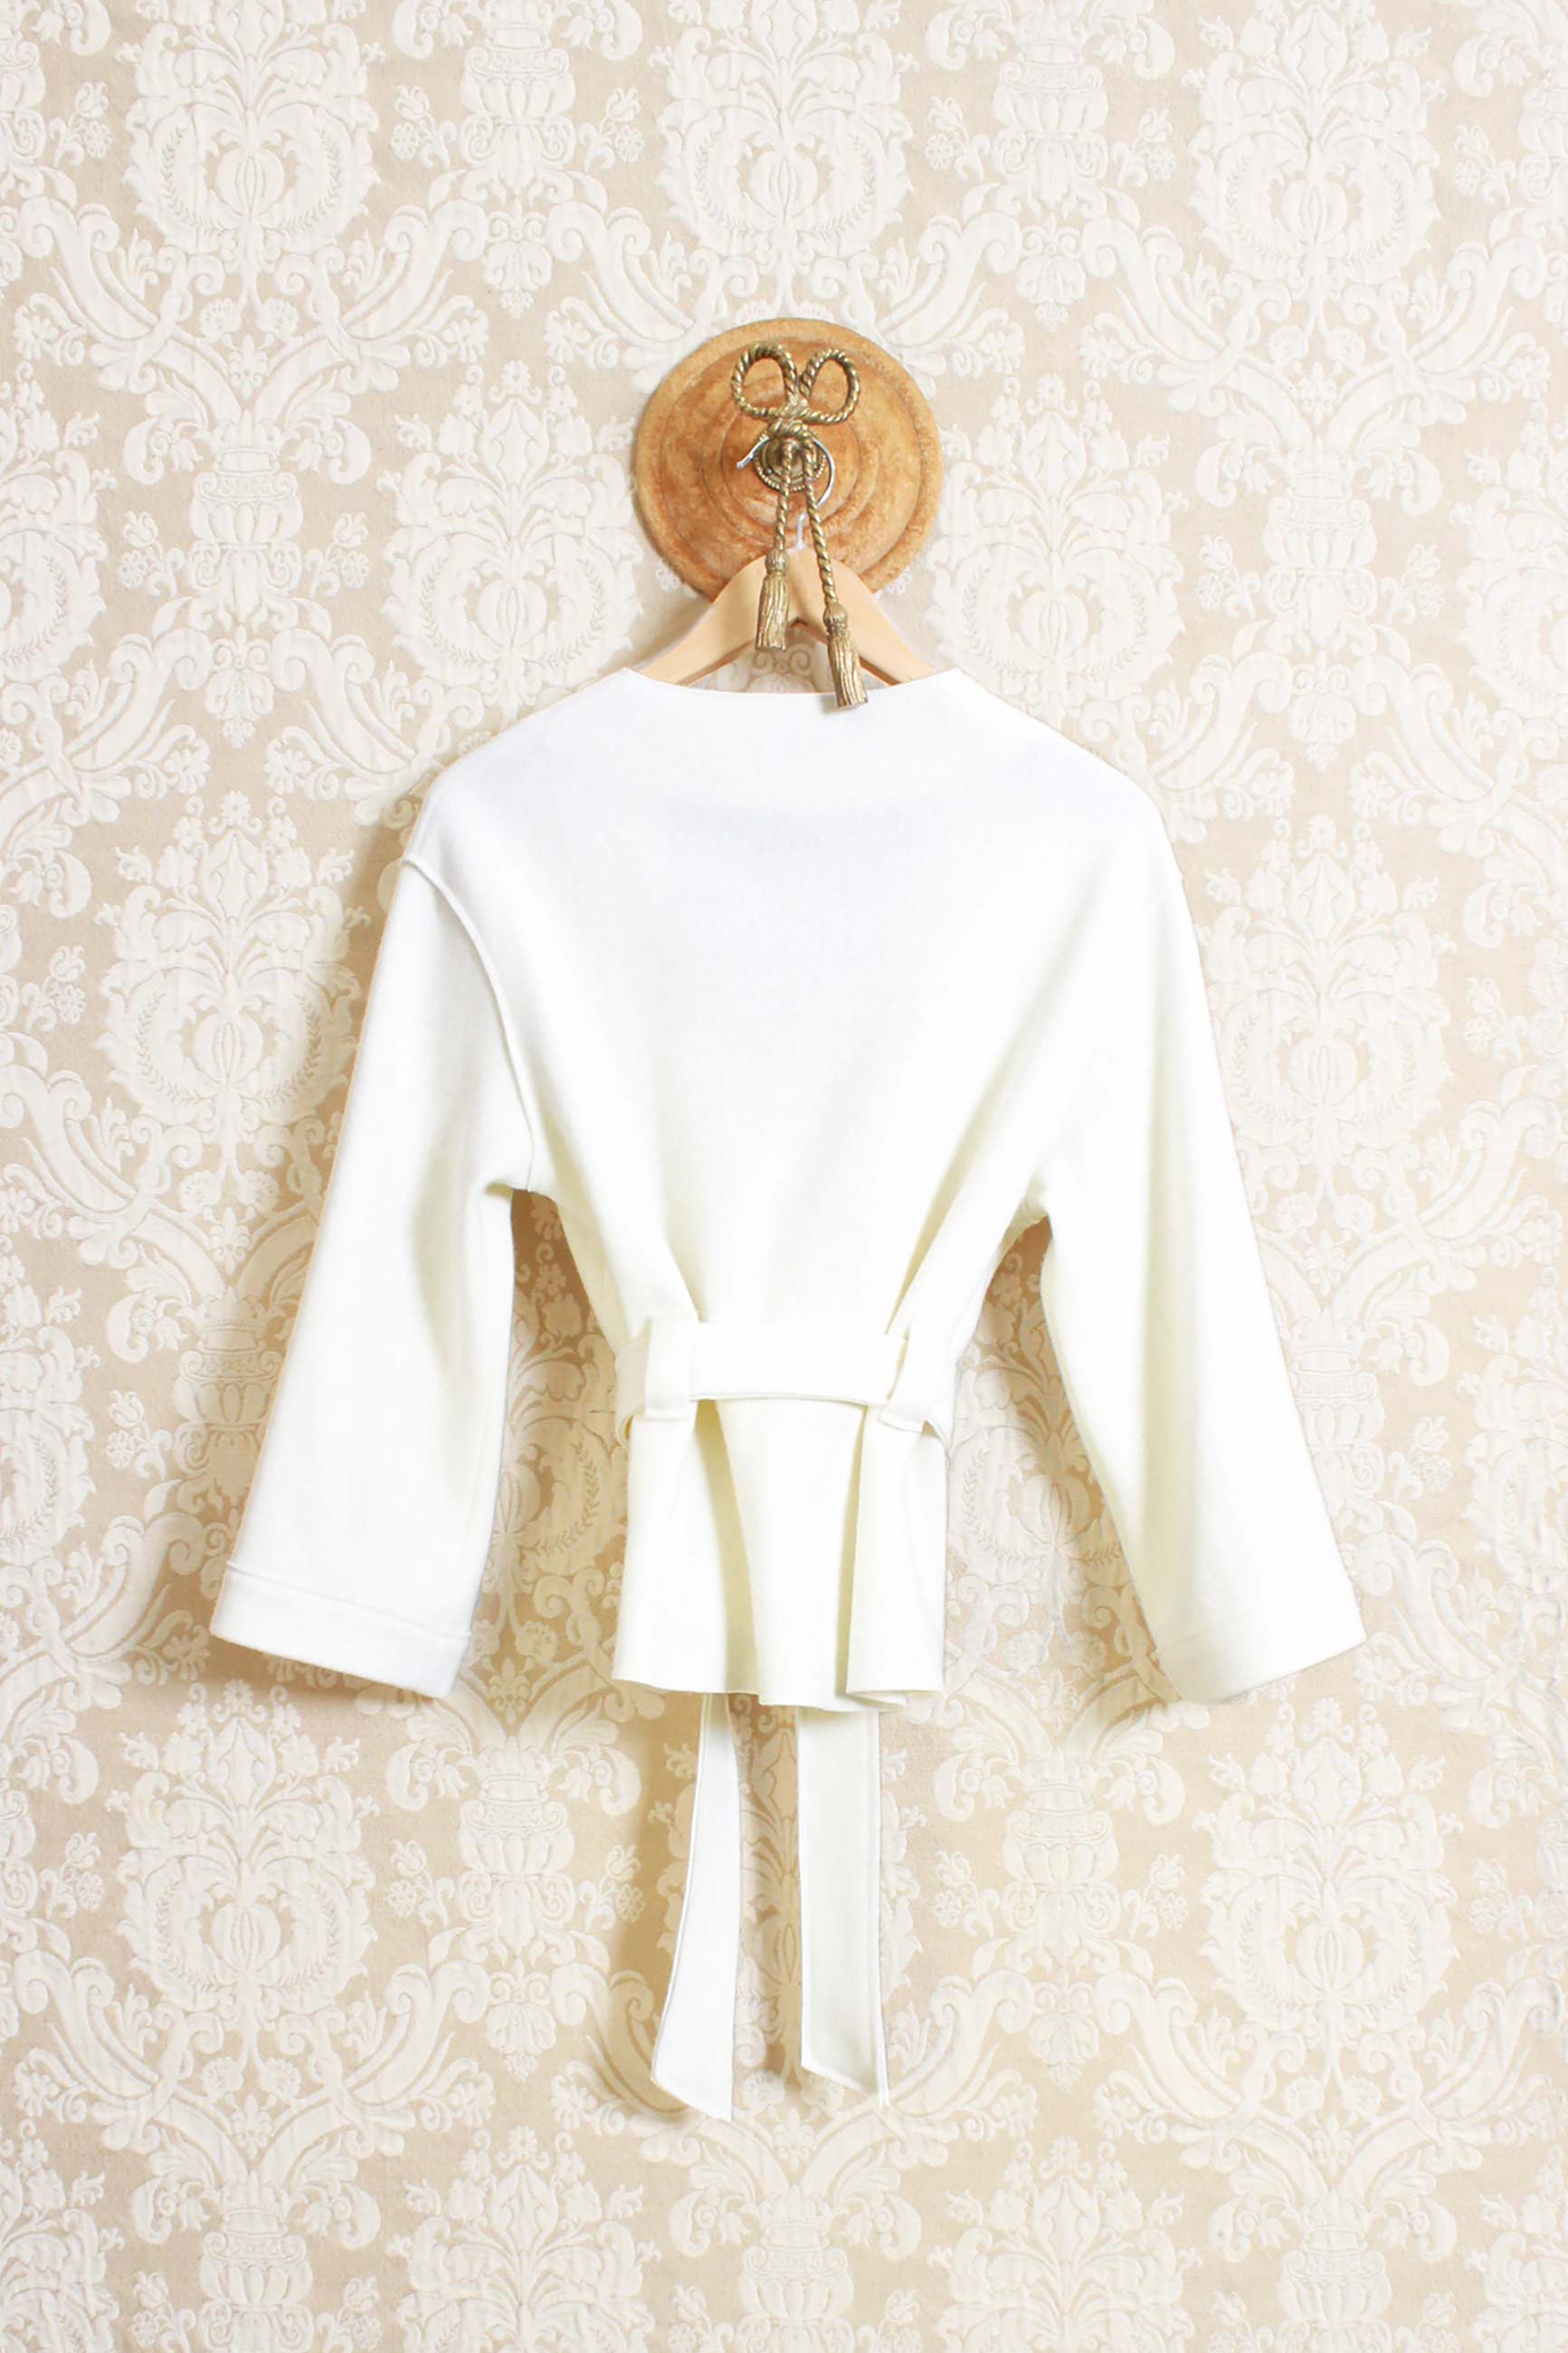 Giacca Kimono della maison niù fashon in morbido panno di lana white yeso